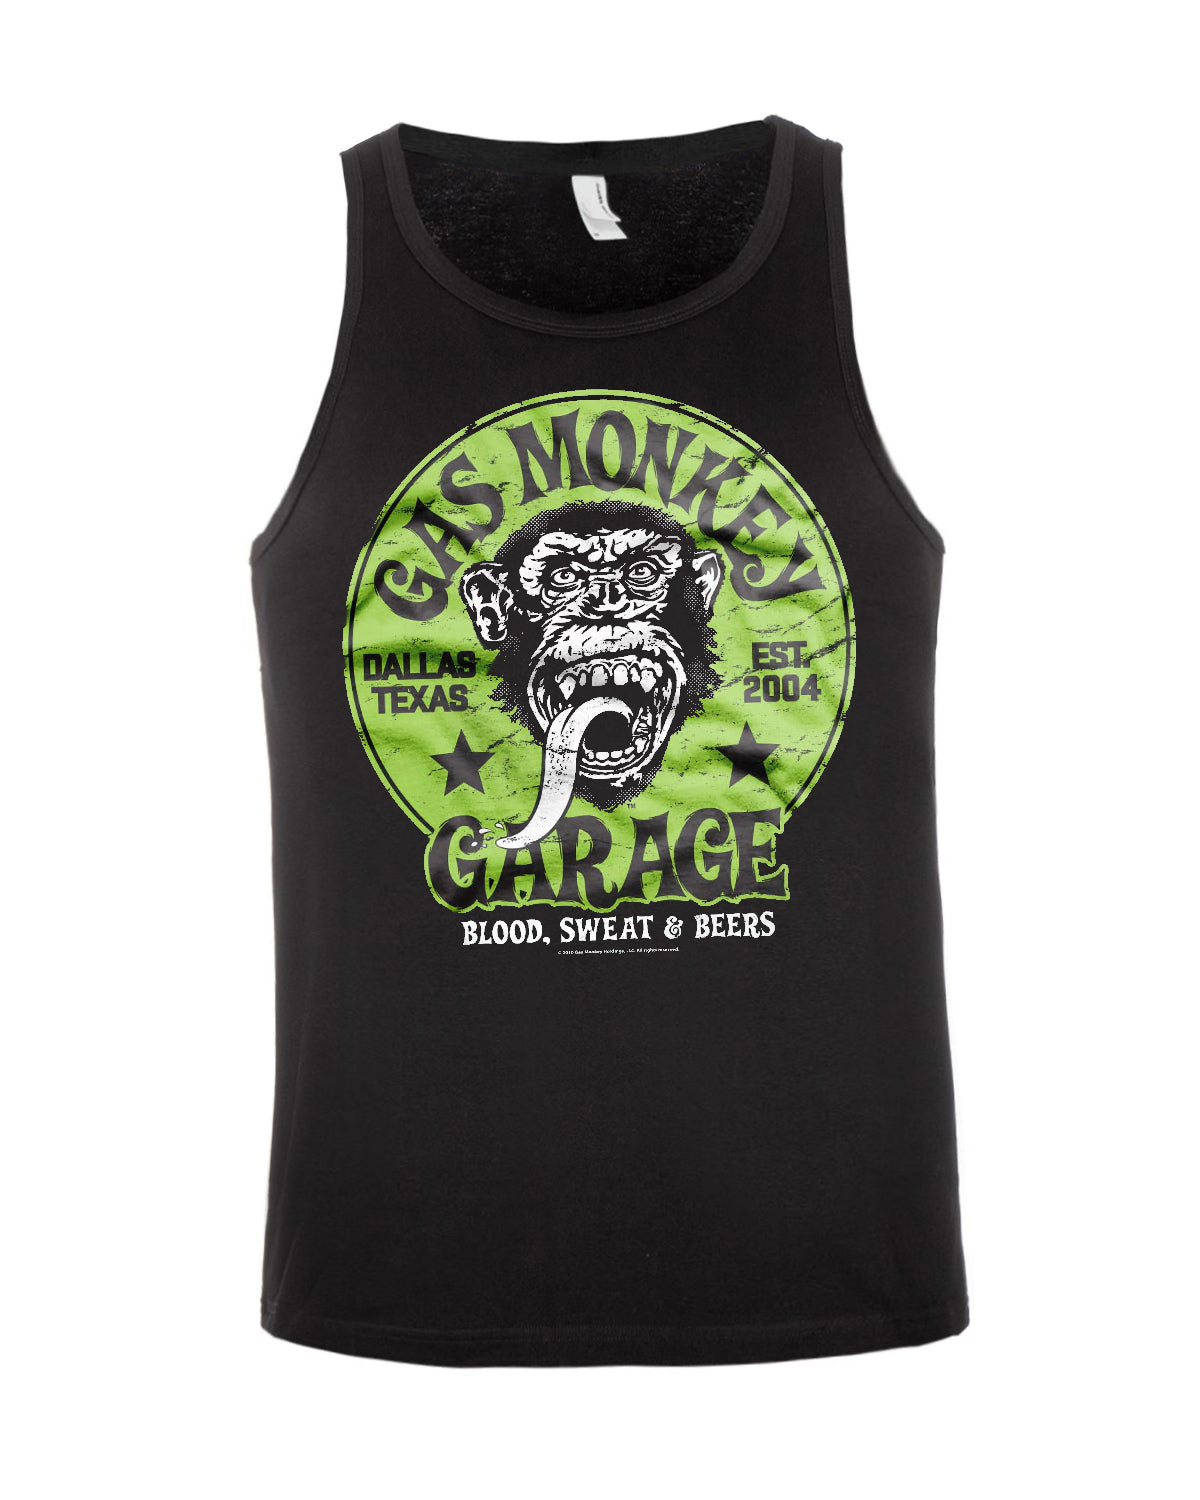 Print Shirt Gas monkey hihaton - Musta/Vihreä 2XL